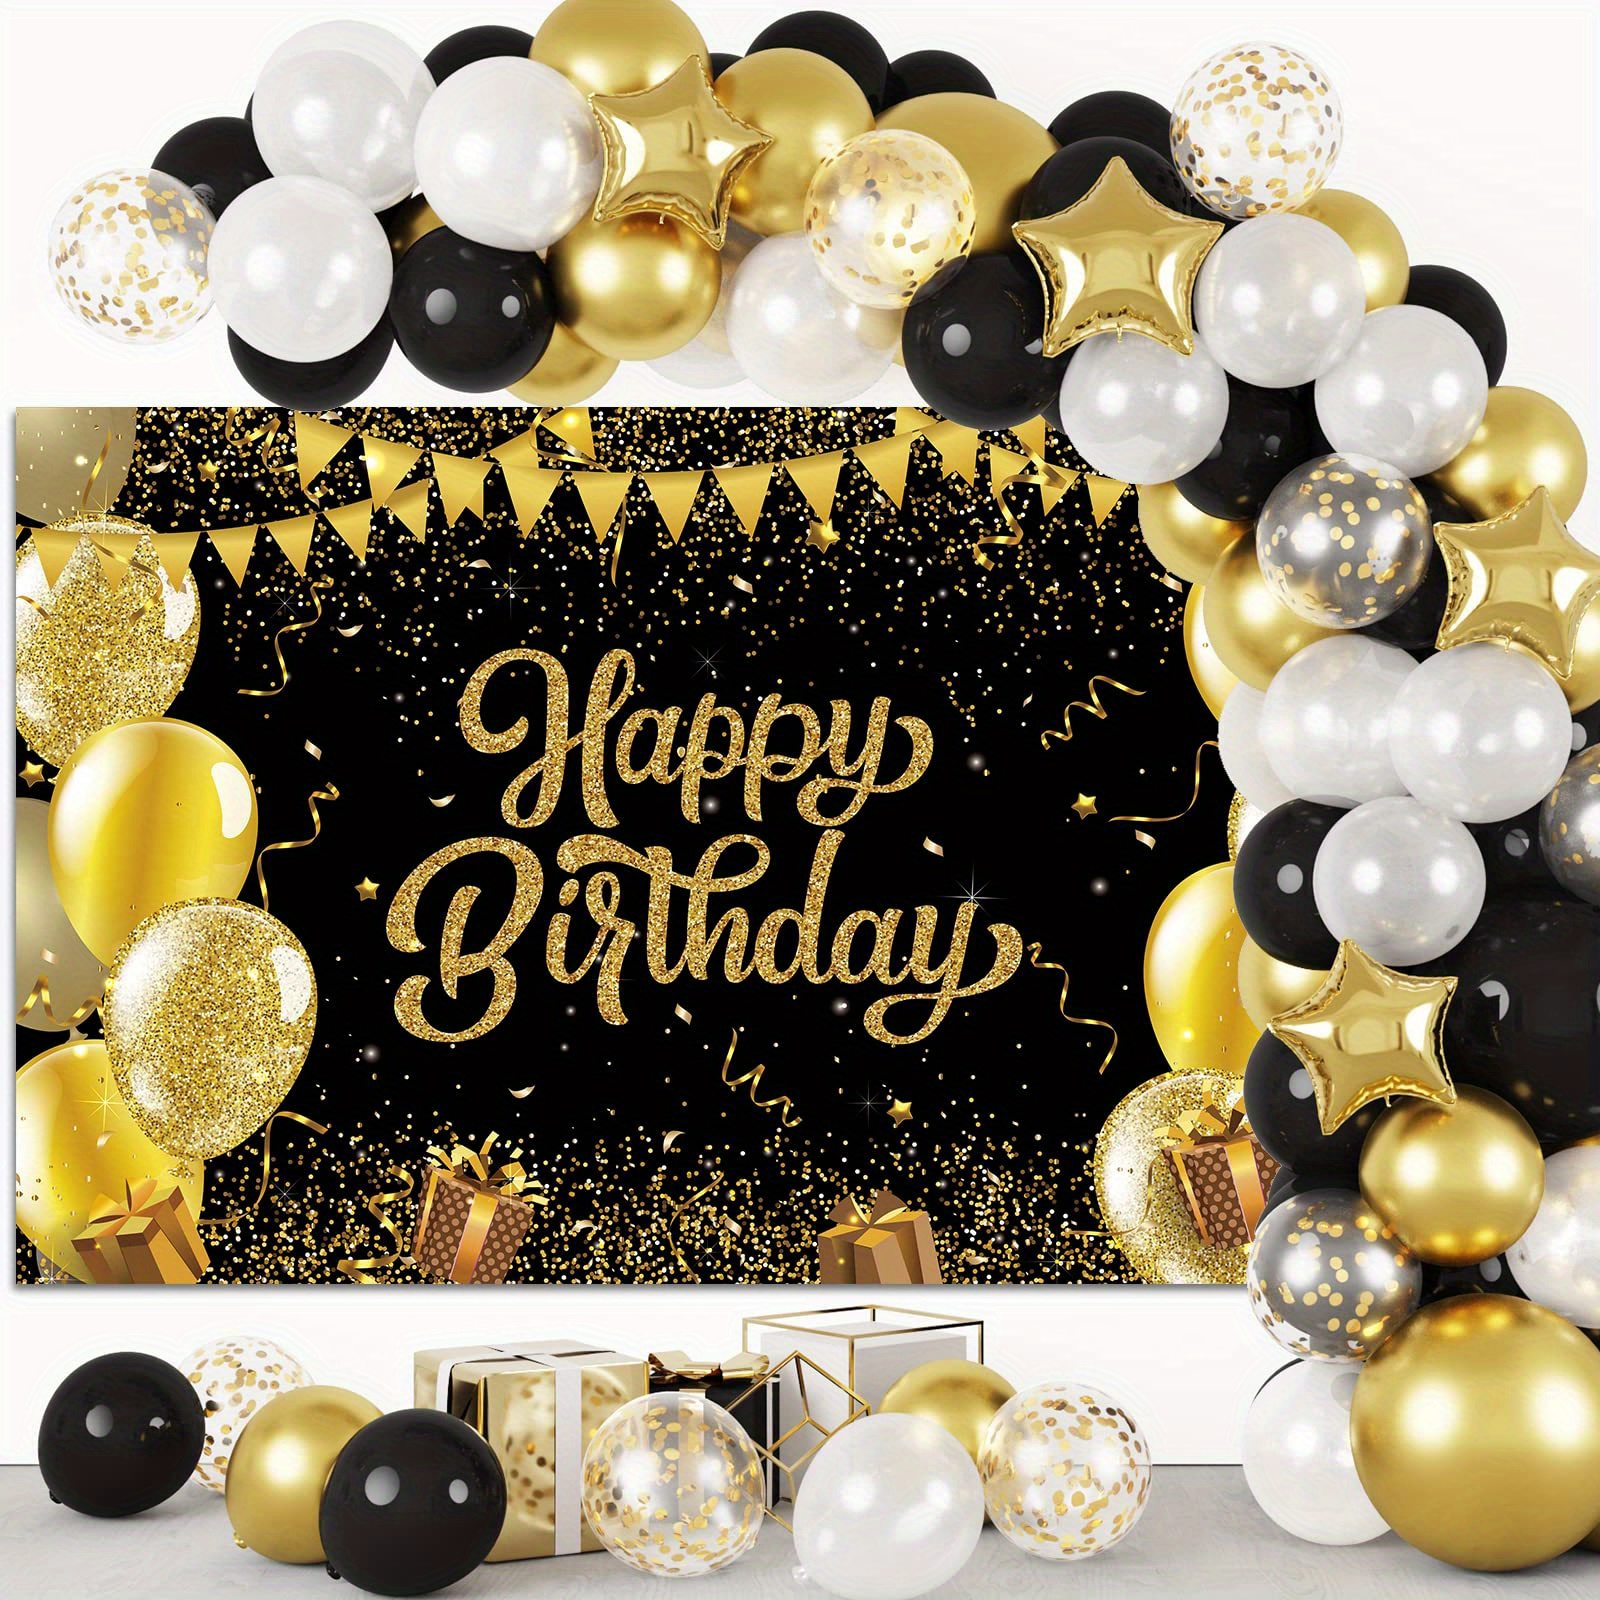 Blue Golden Happy Birthday Backdrop Balloons Photography Party Supplies  Decor